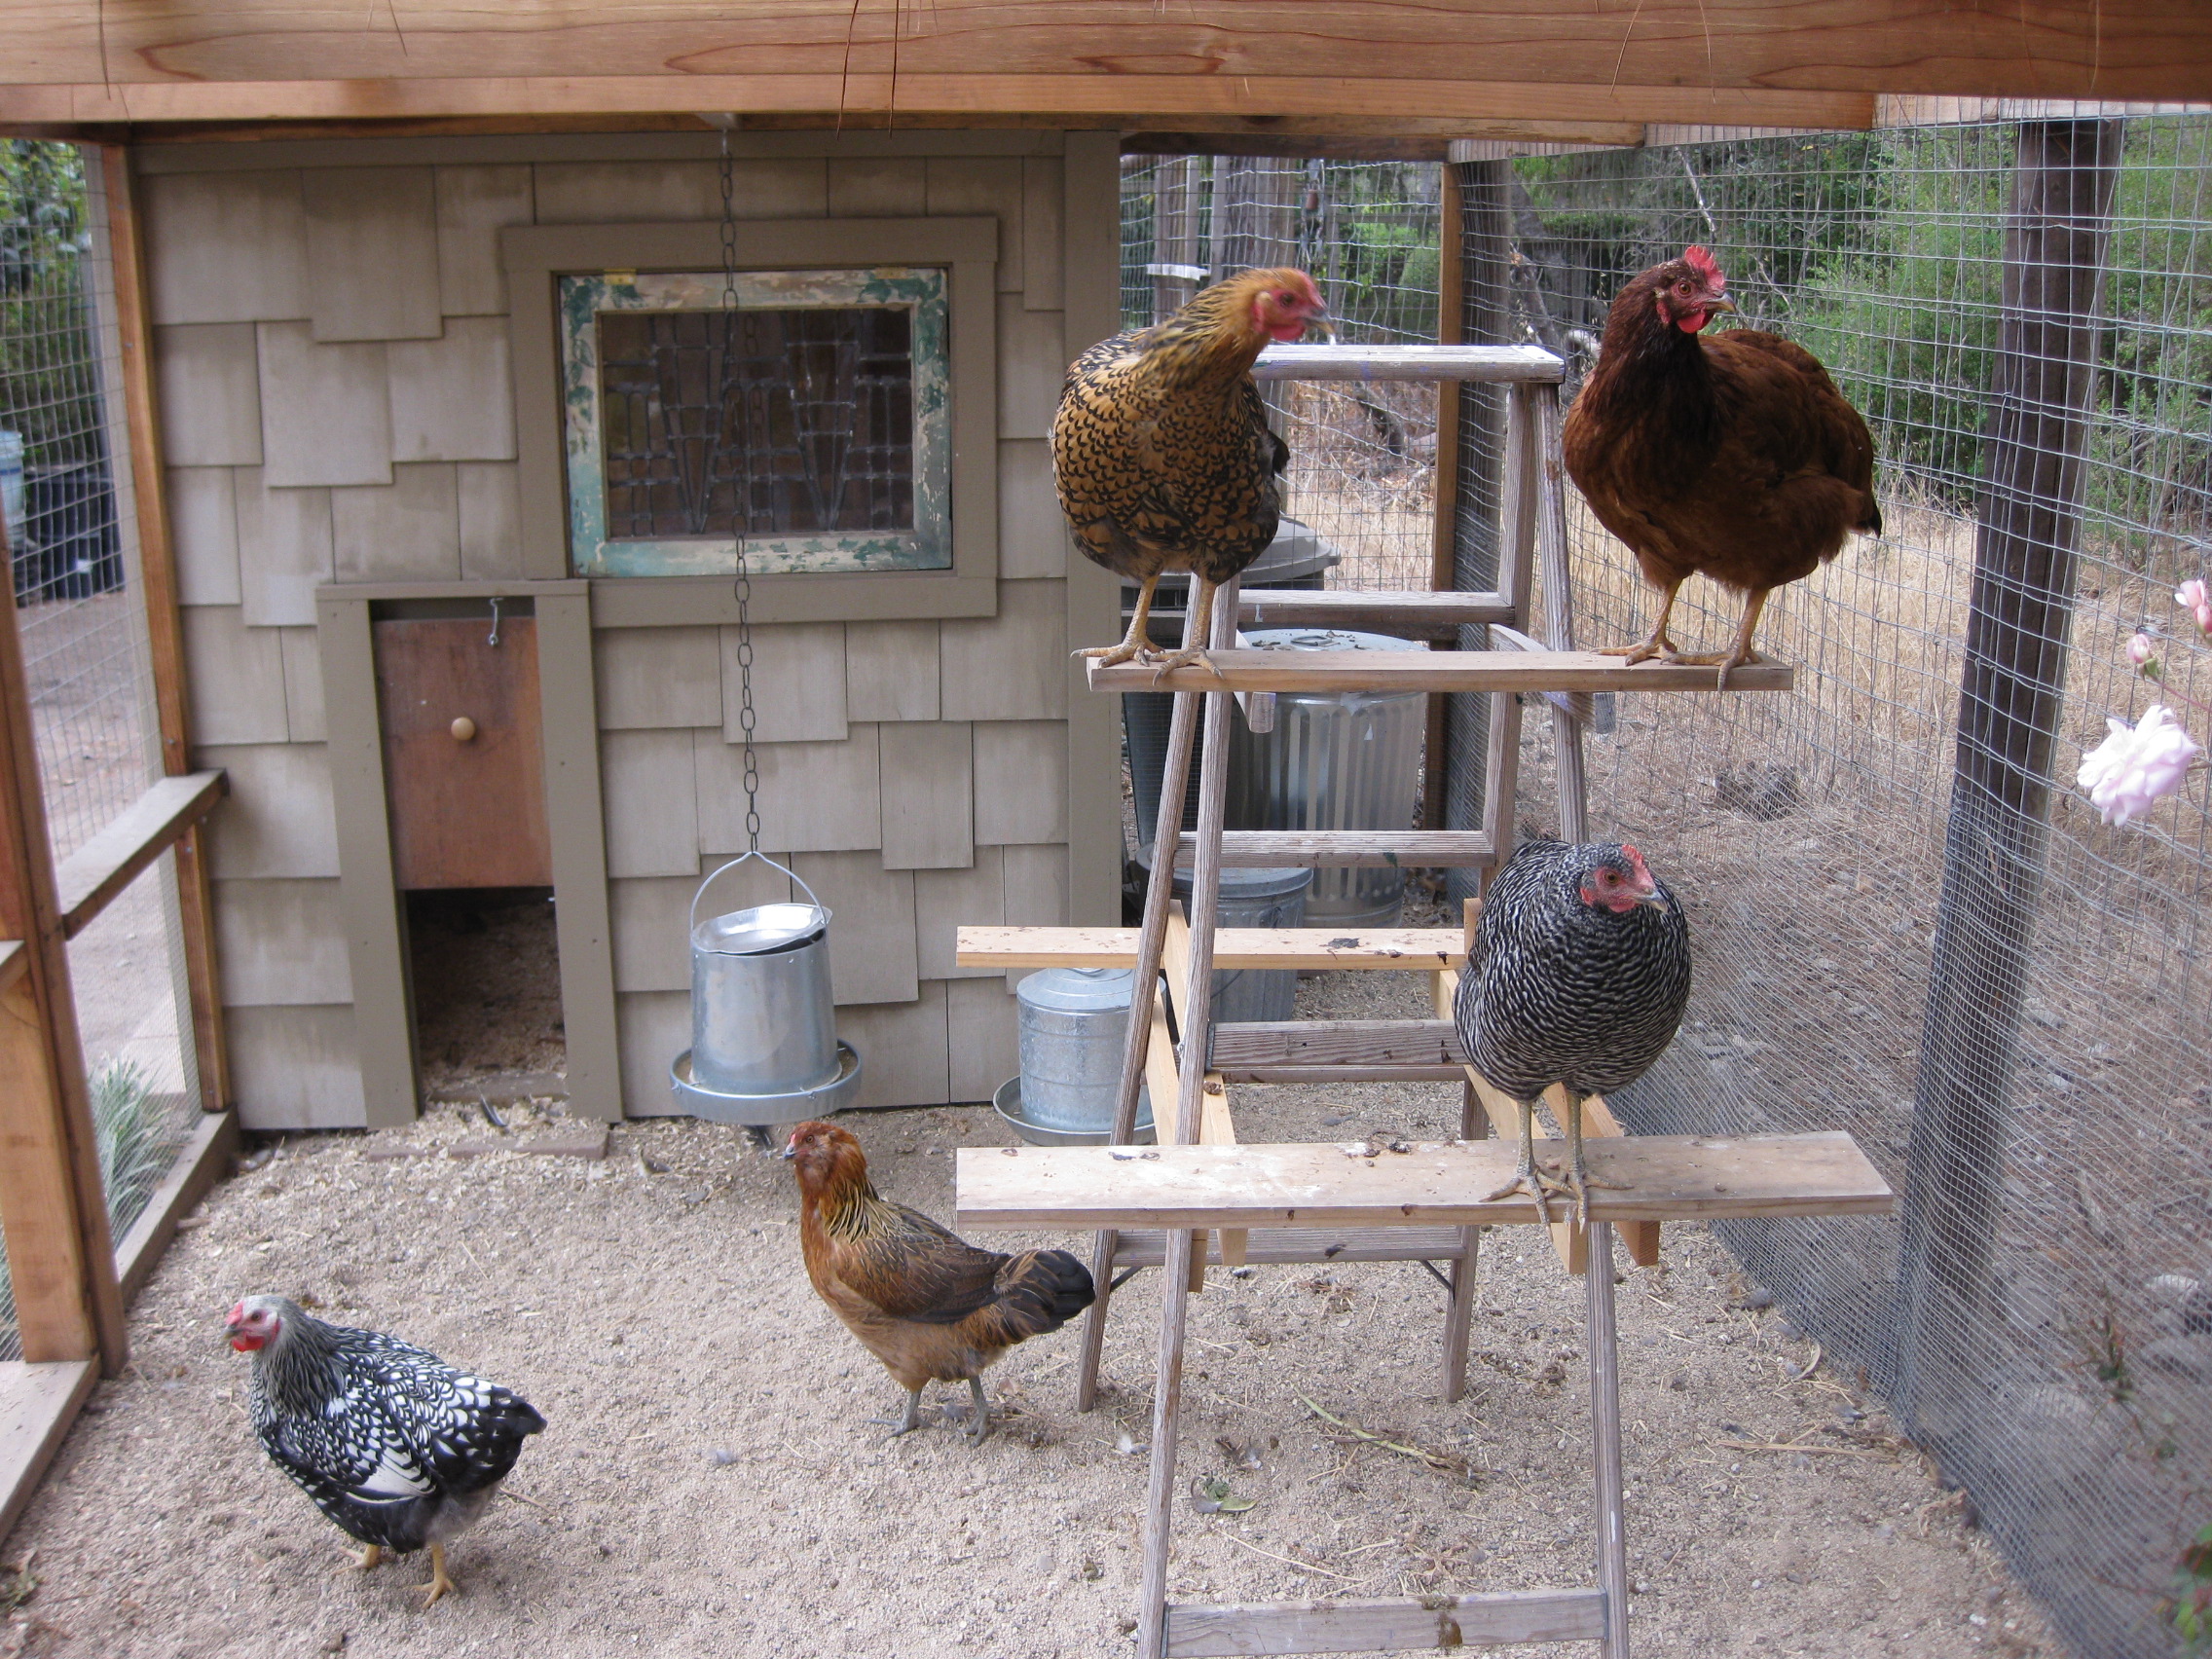 Floor Space for Chicken Coop and Runs - Raising Chickens - coop design ...